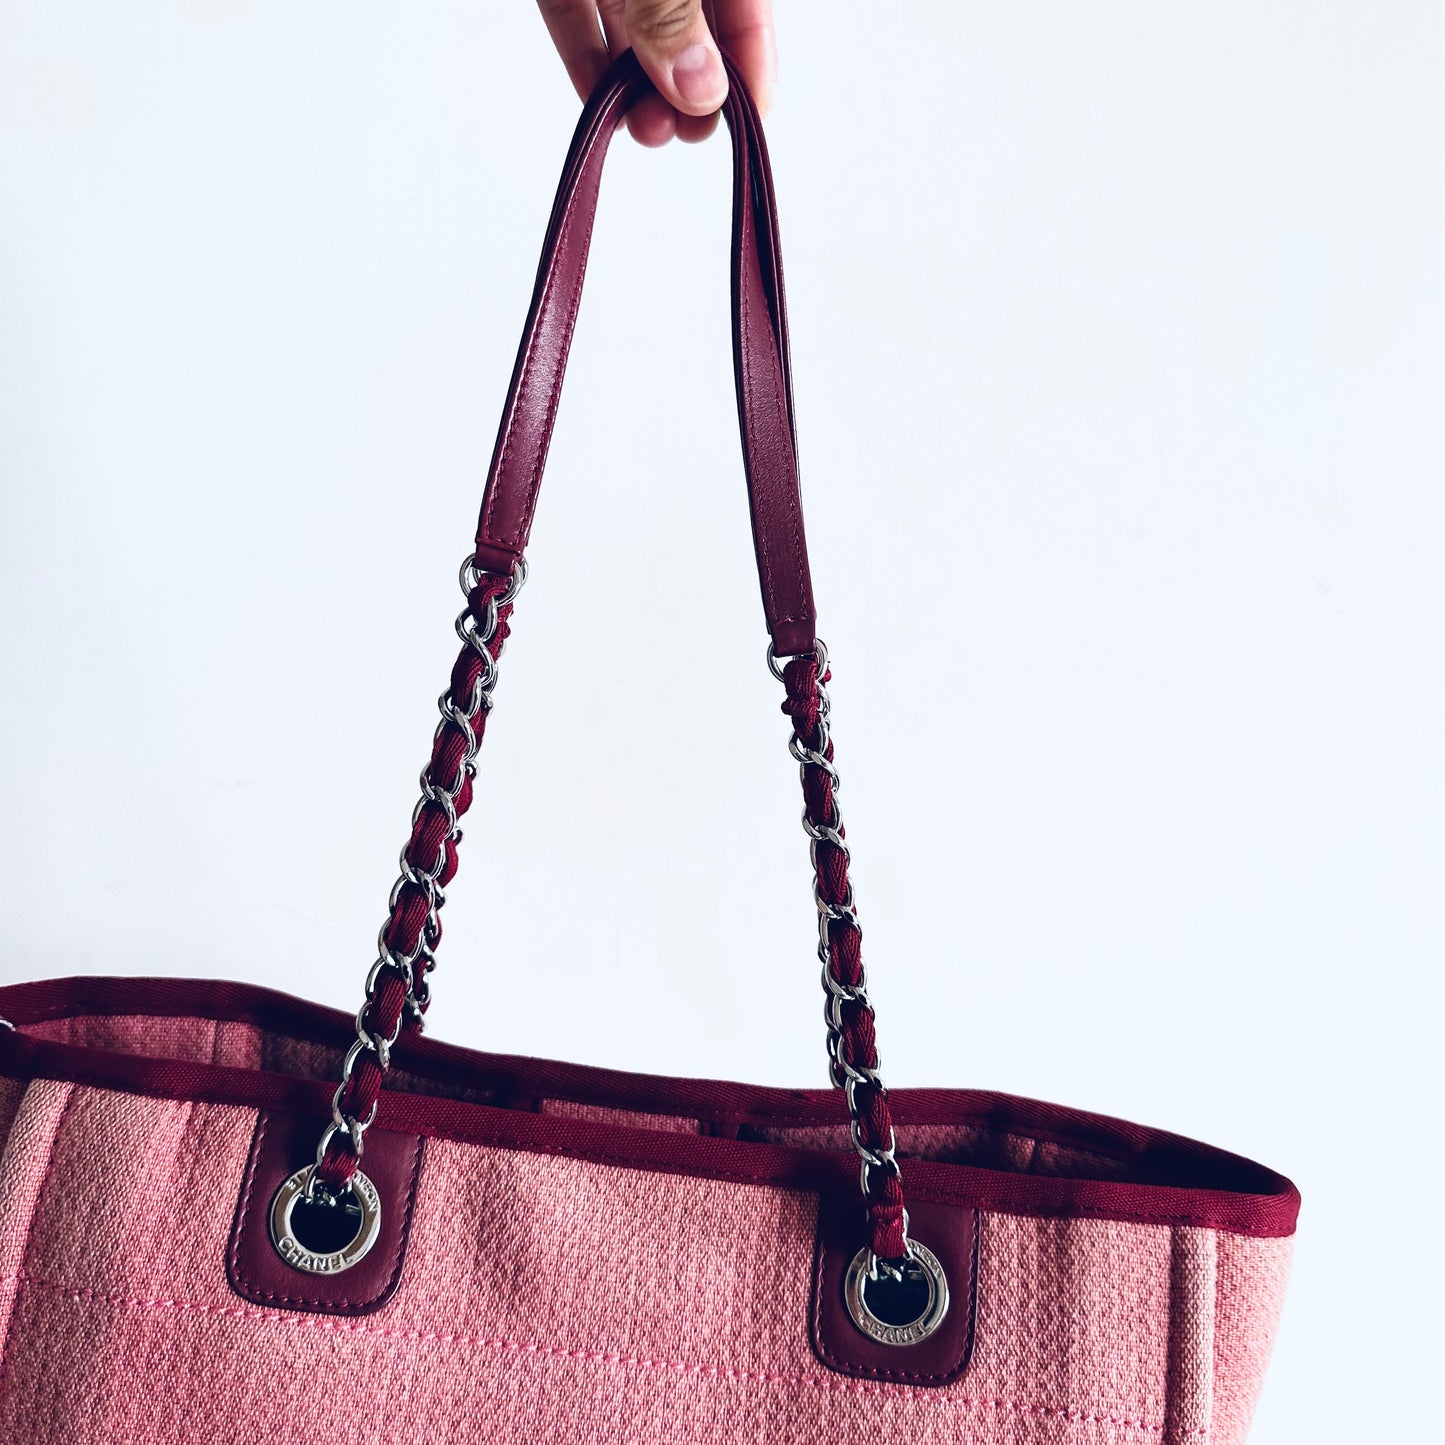 Chanel Pink Deauville PM Giant CC Monogram Logo Shoulder Shopper Tote Bag 16s